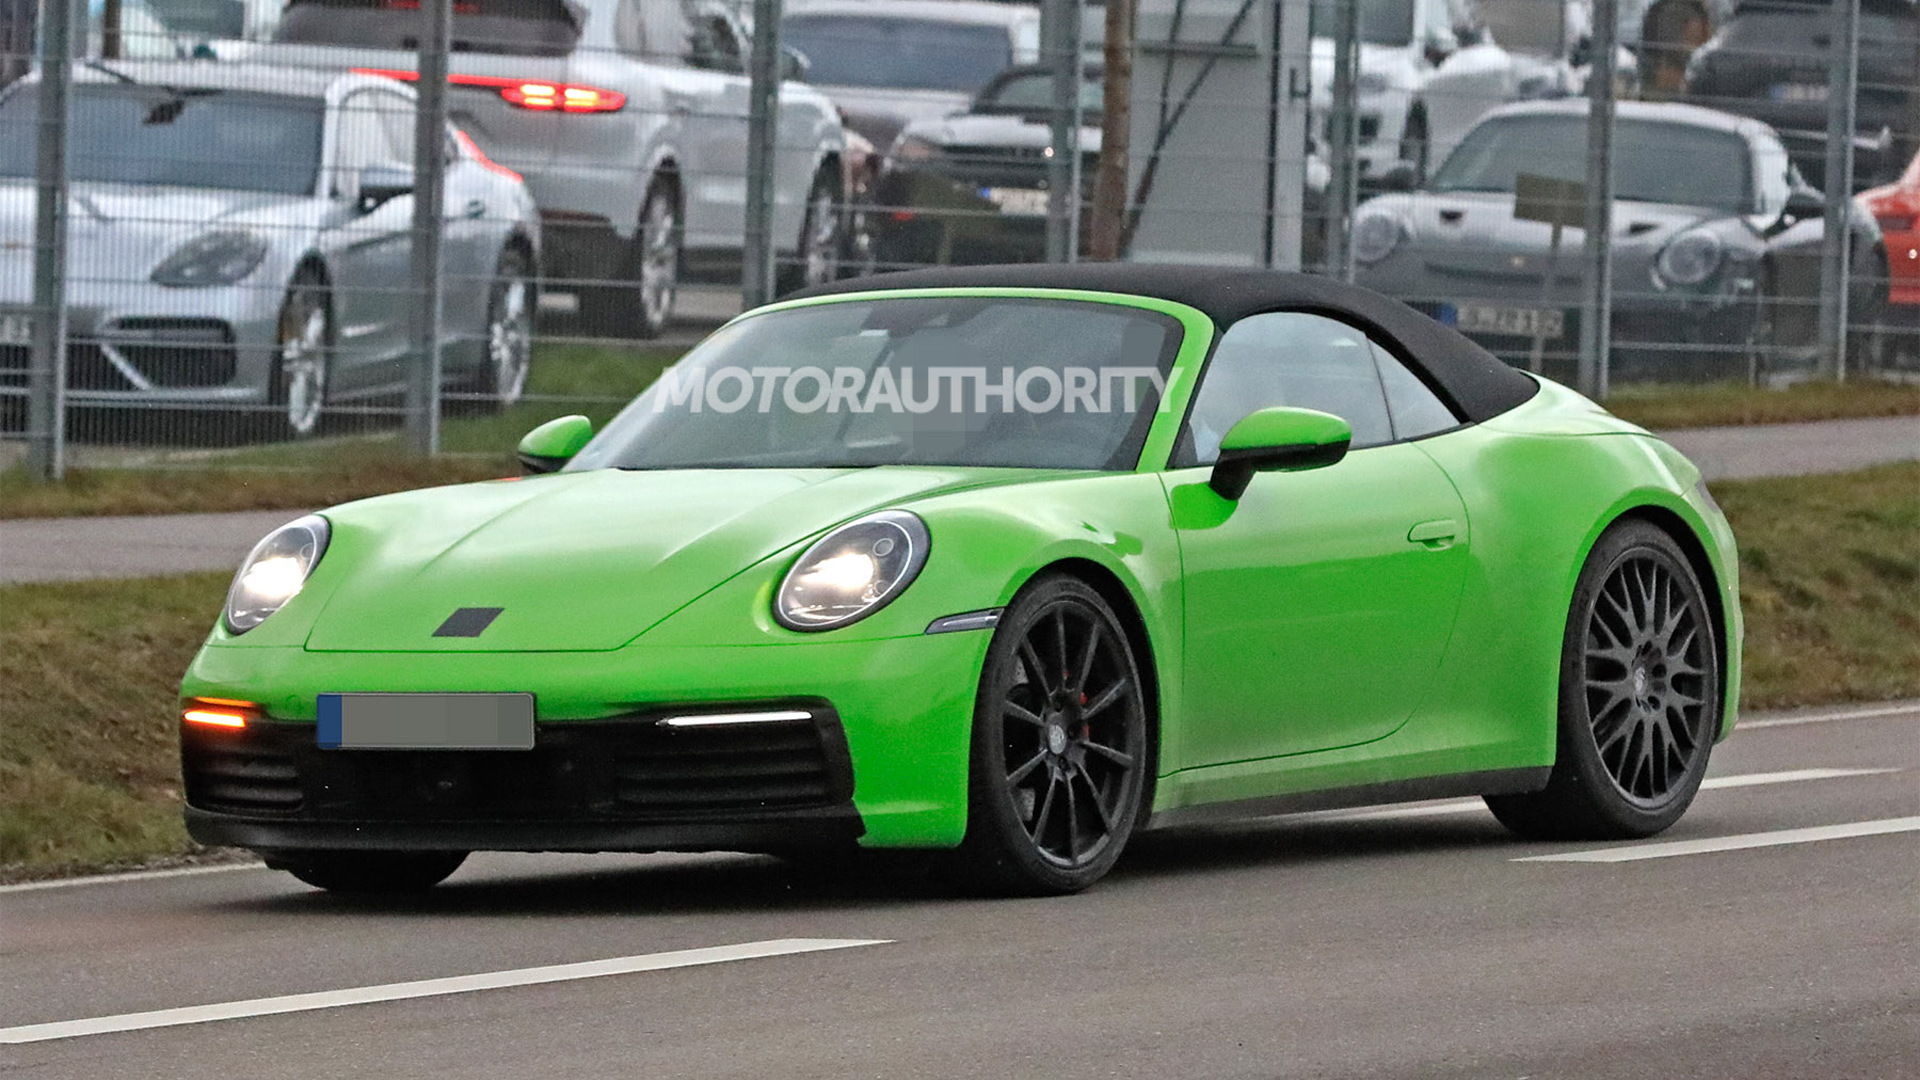 2020 Porsche 911 Cabriolet spy shots - Image via S. Baldauf/SB-Medien